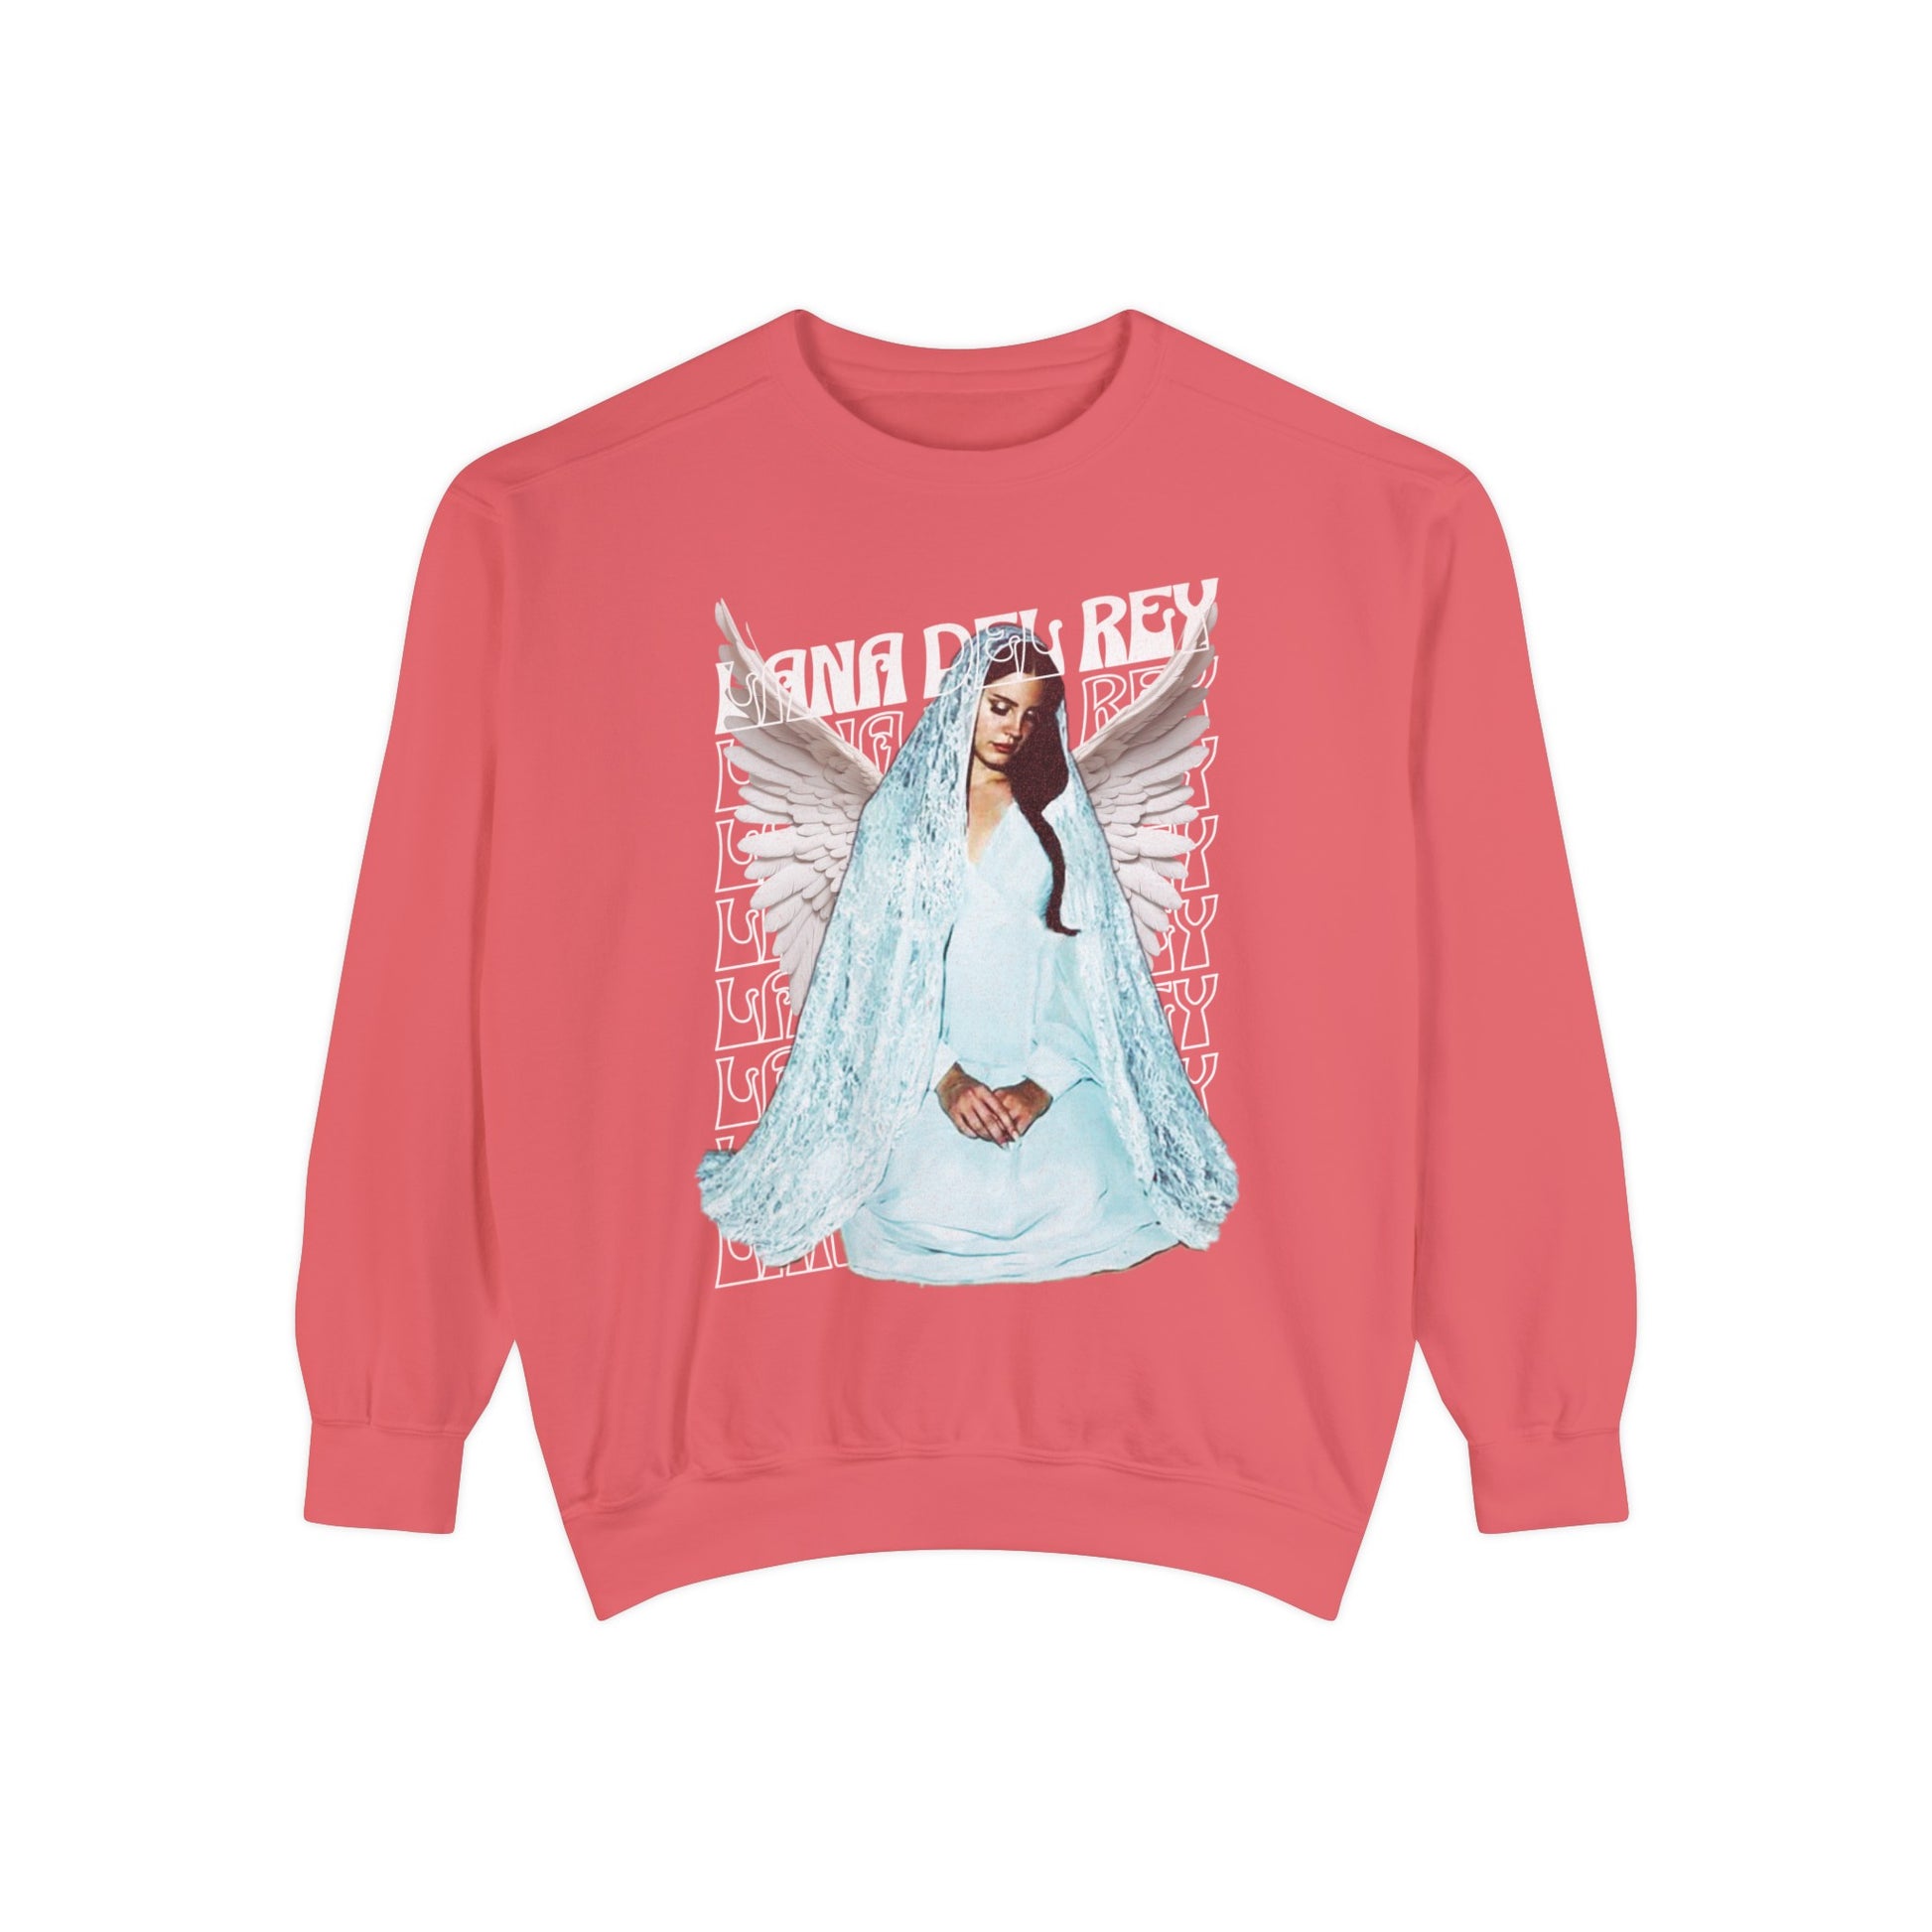 Lana Del Rey Sweatshirt Watermelon